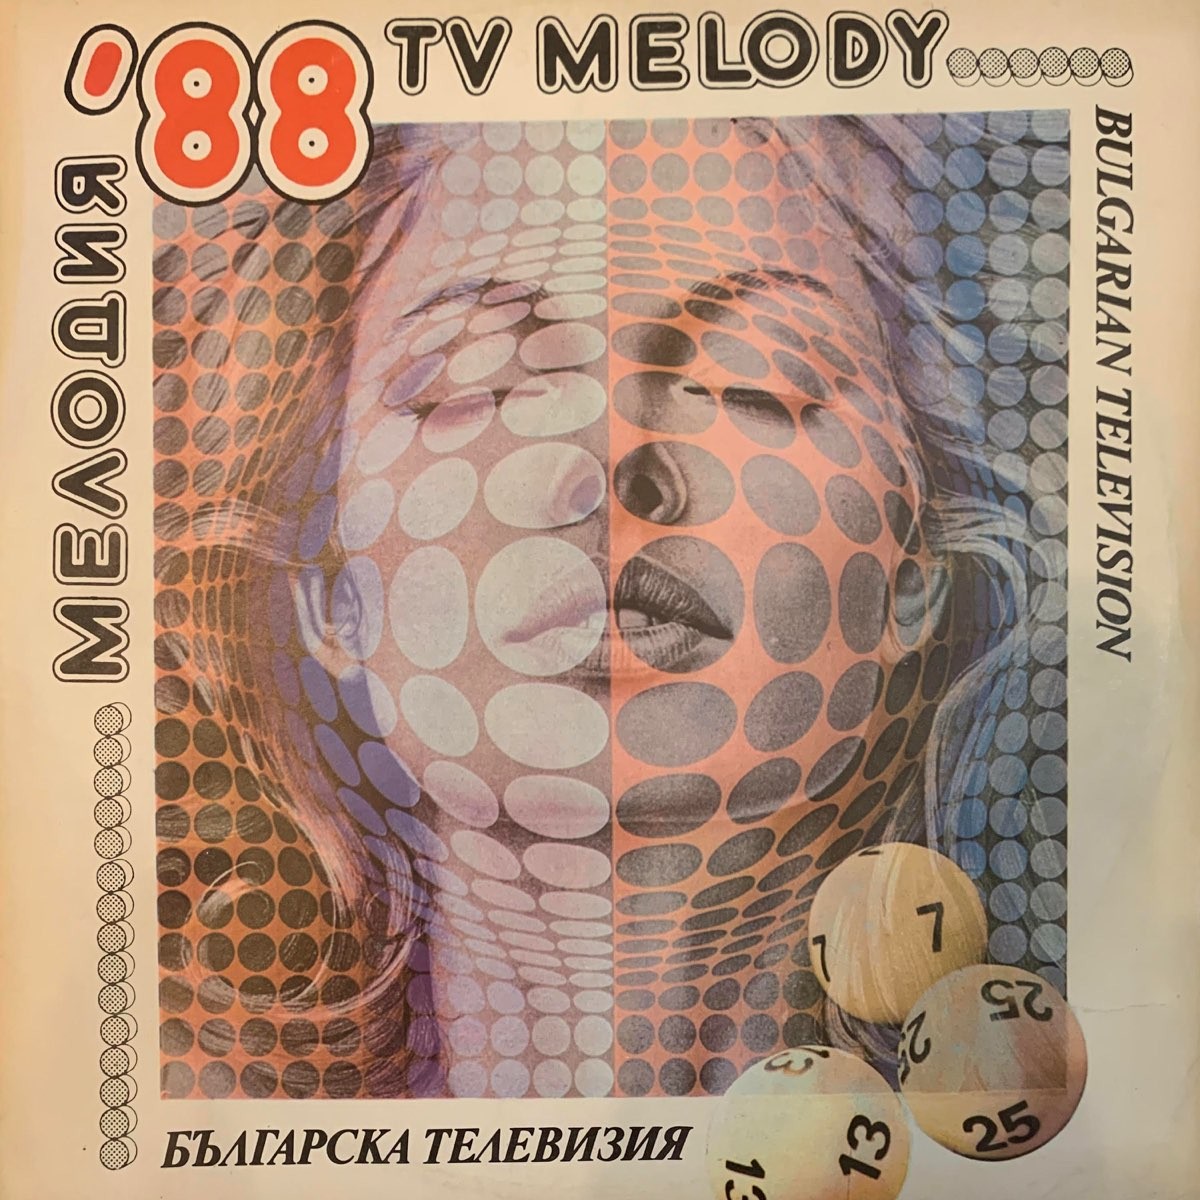 Българска телевизия. Мелодия '88